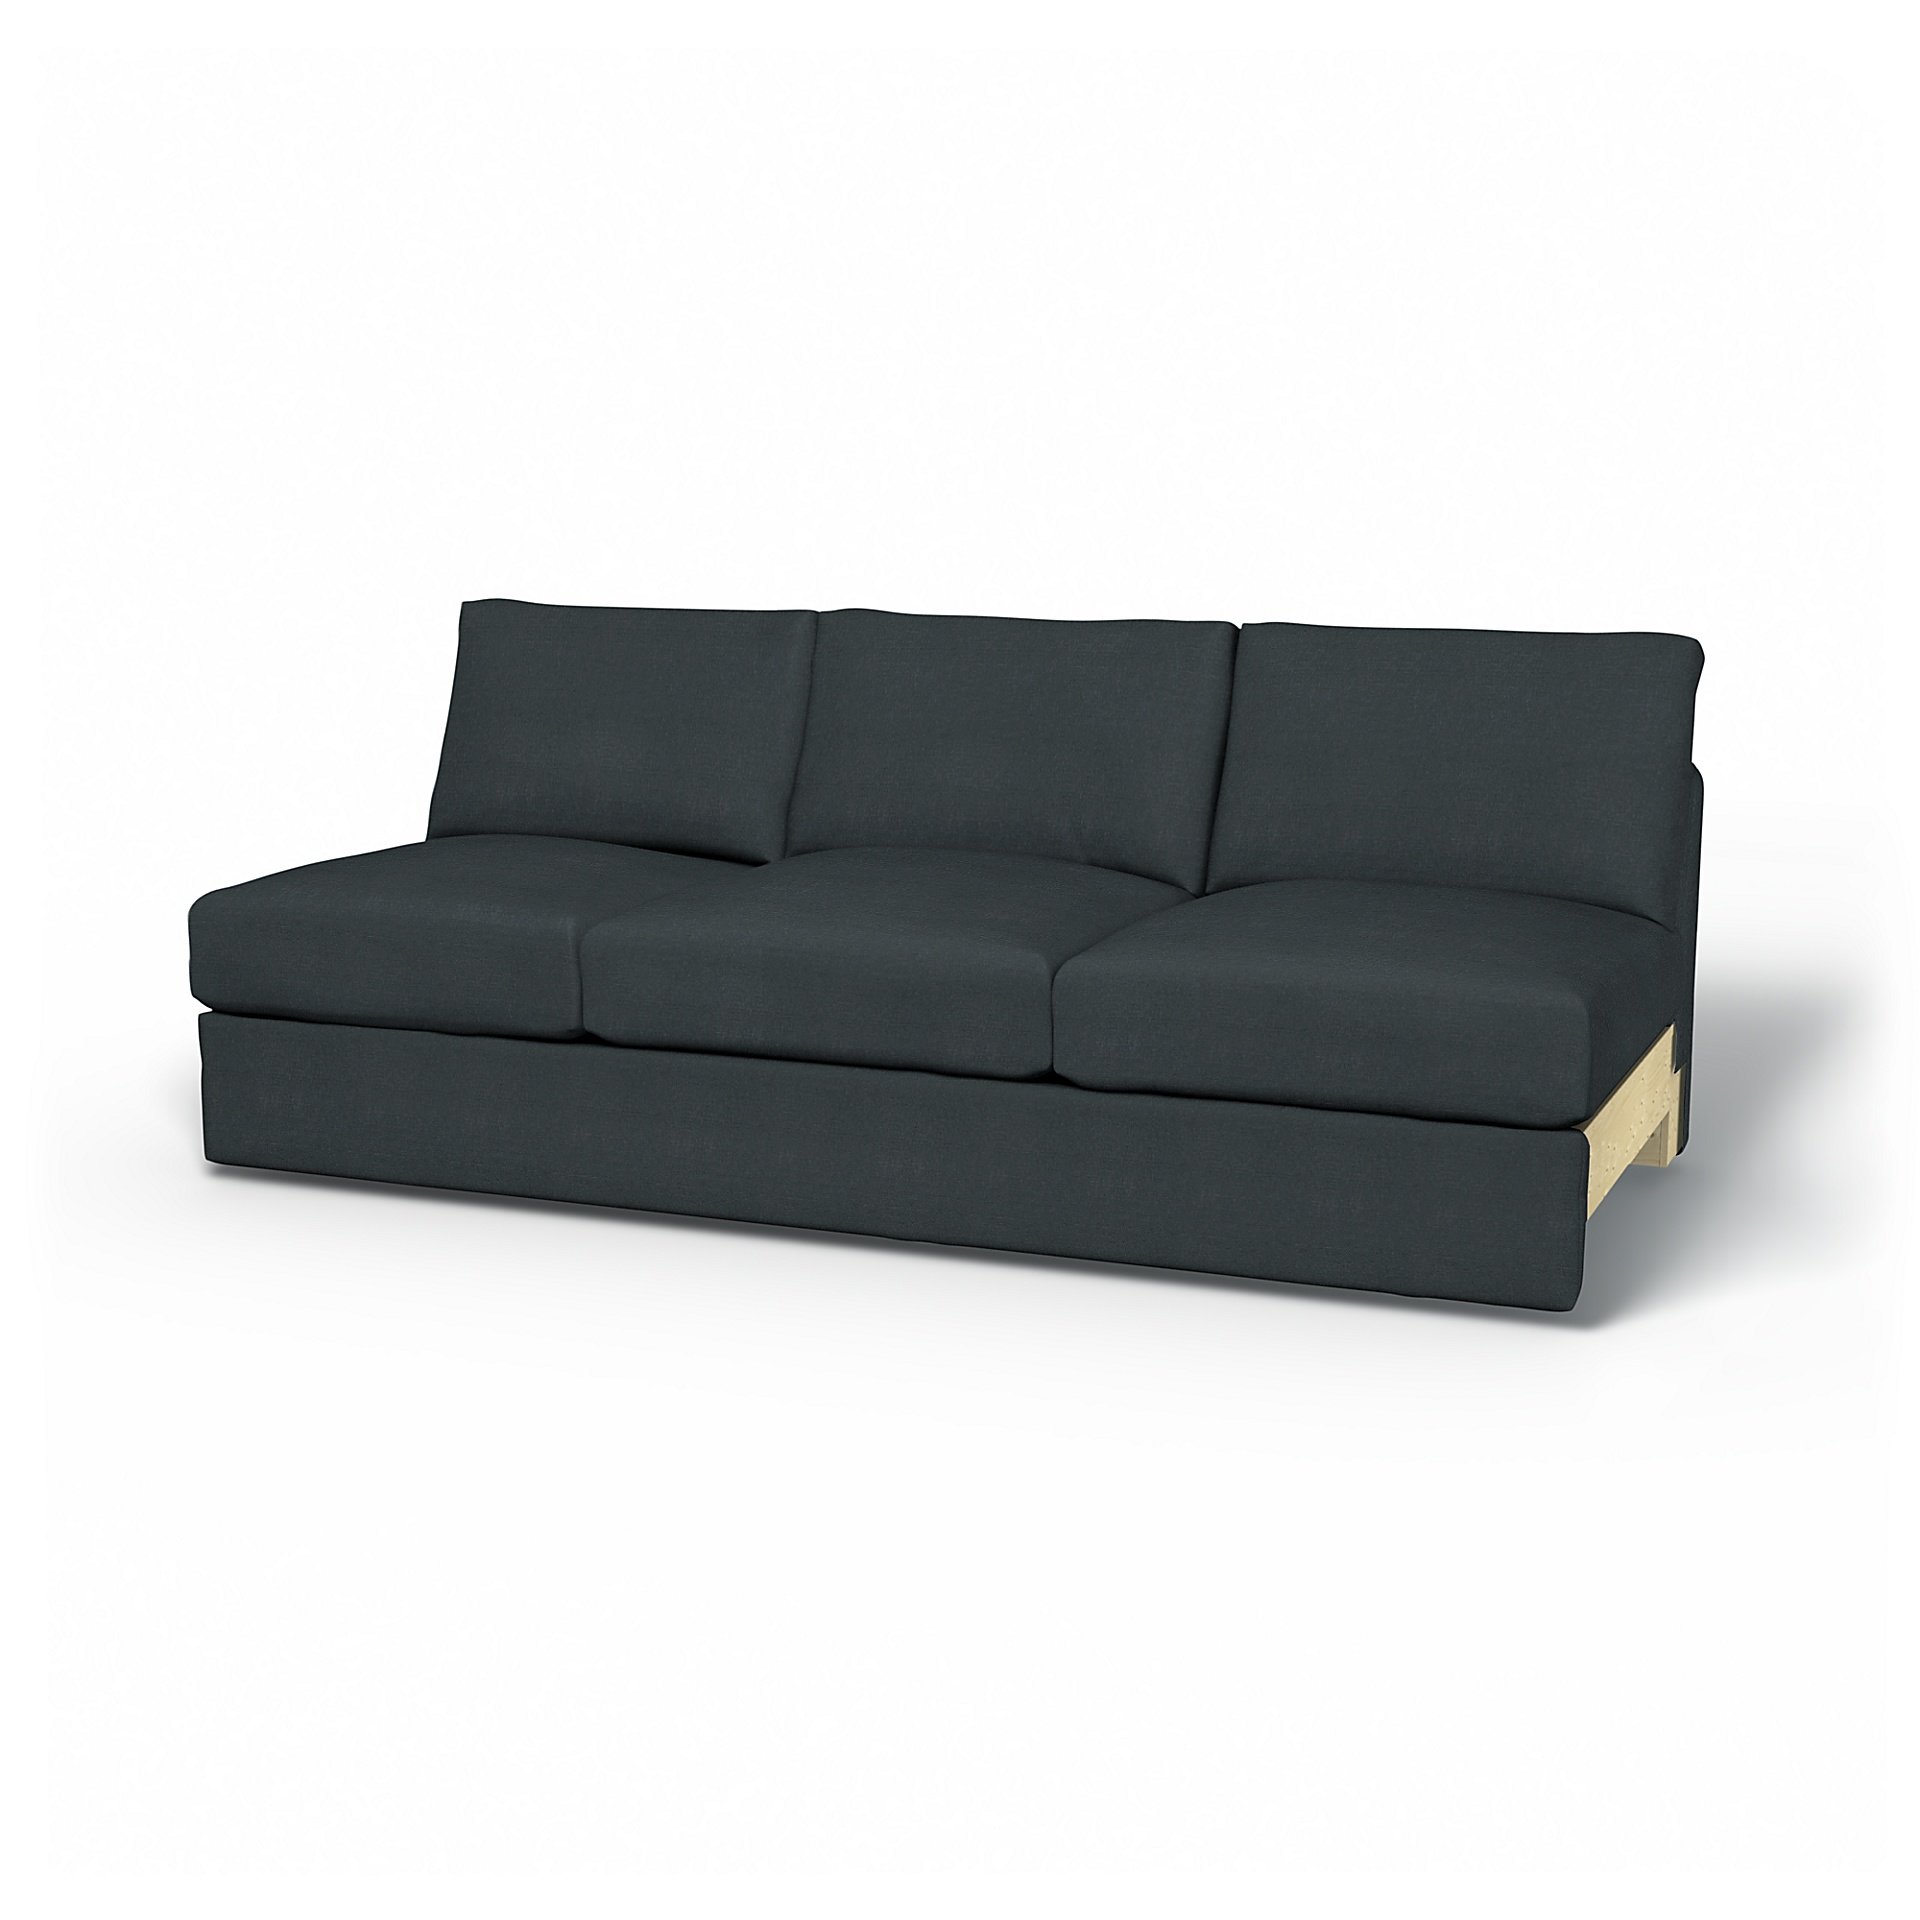 IKEA - Vimle 3 Seat Section Cover, Graphite Grey, Linen - Bemz